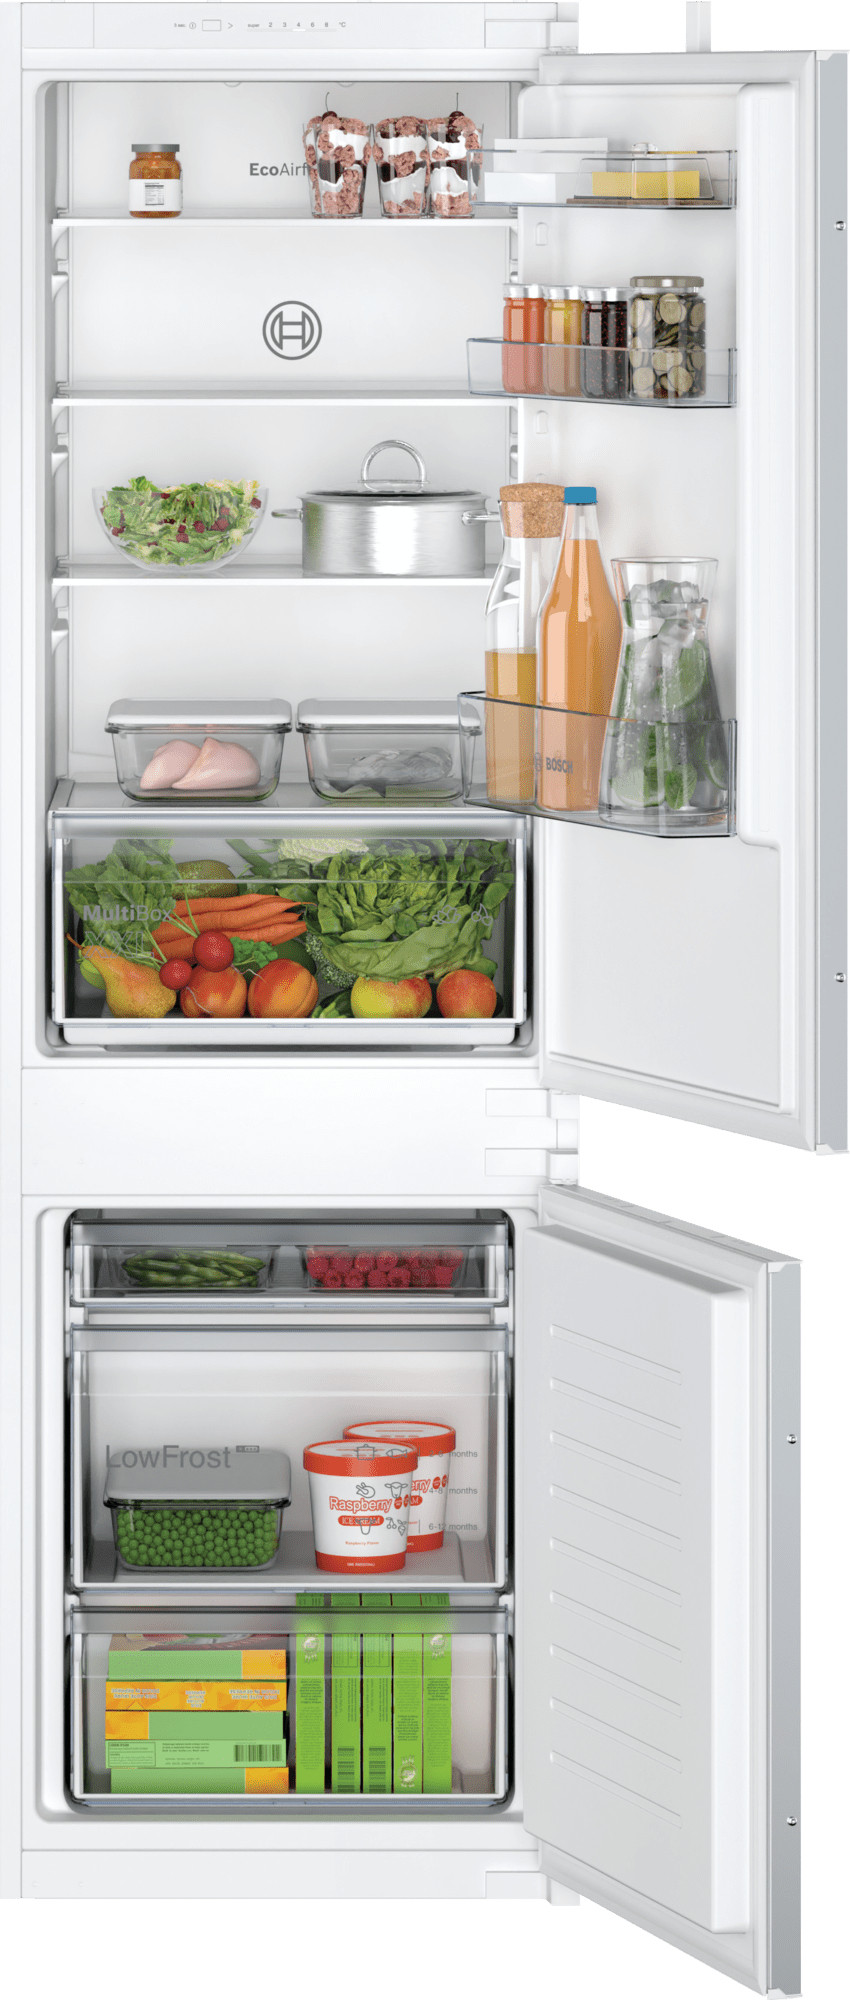 Bosch | KIV86NSE0 Series 2 | Refrigerator | Energy efficiency class E | Built-in | Combi | Height 177.2 cm | Fridge net capacity 183 L | Freezer net capacity 84 L | 35 dB | White